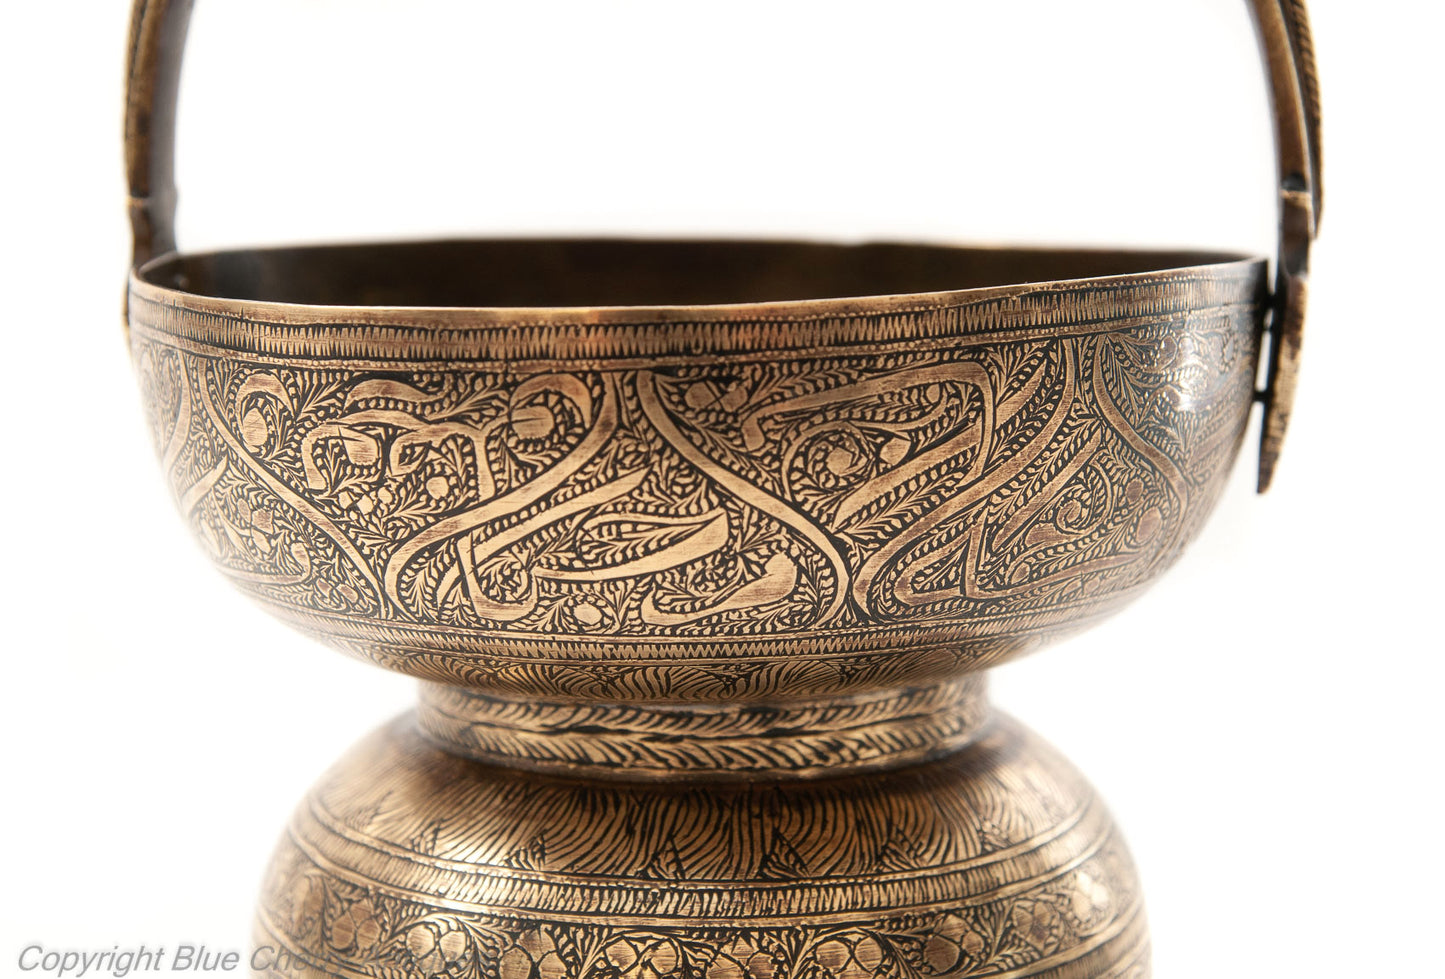 Antique Deccani Indian Islamic Benares Brass Chased Naskh Script Alms Bowl (Code 1823)